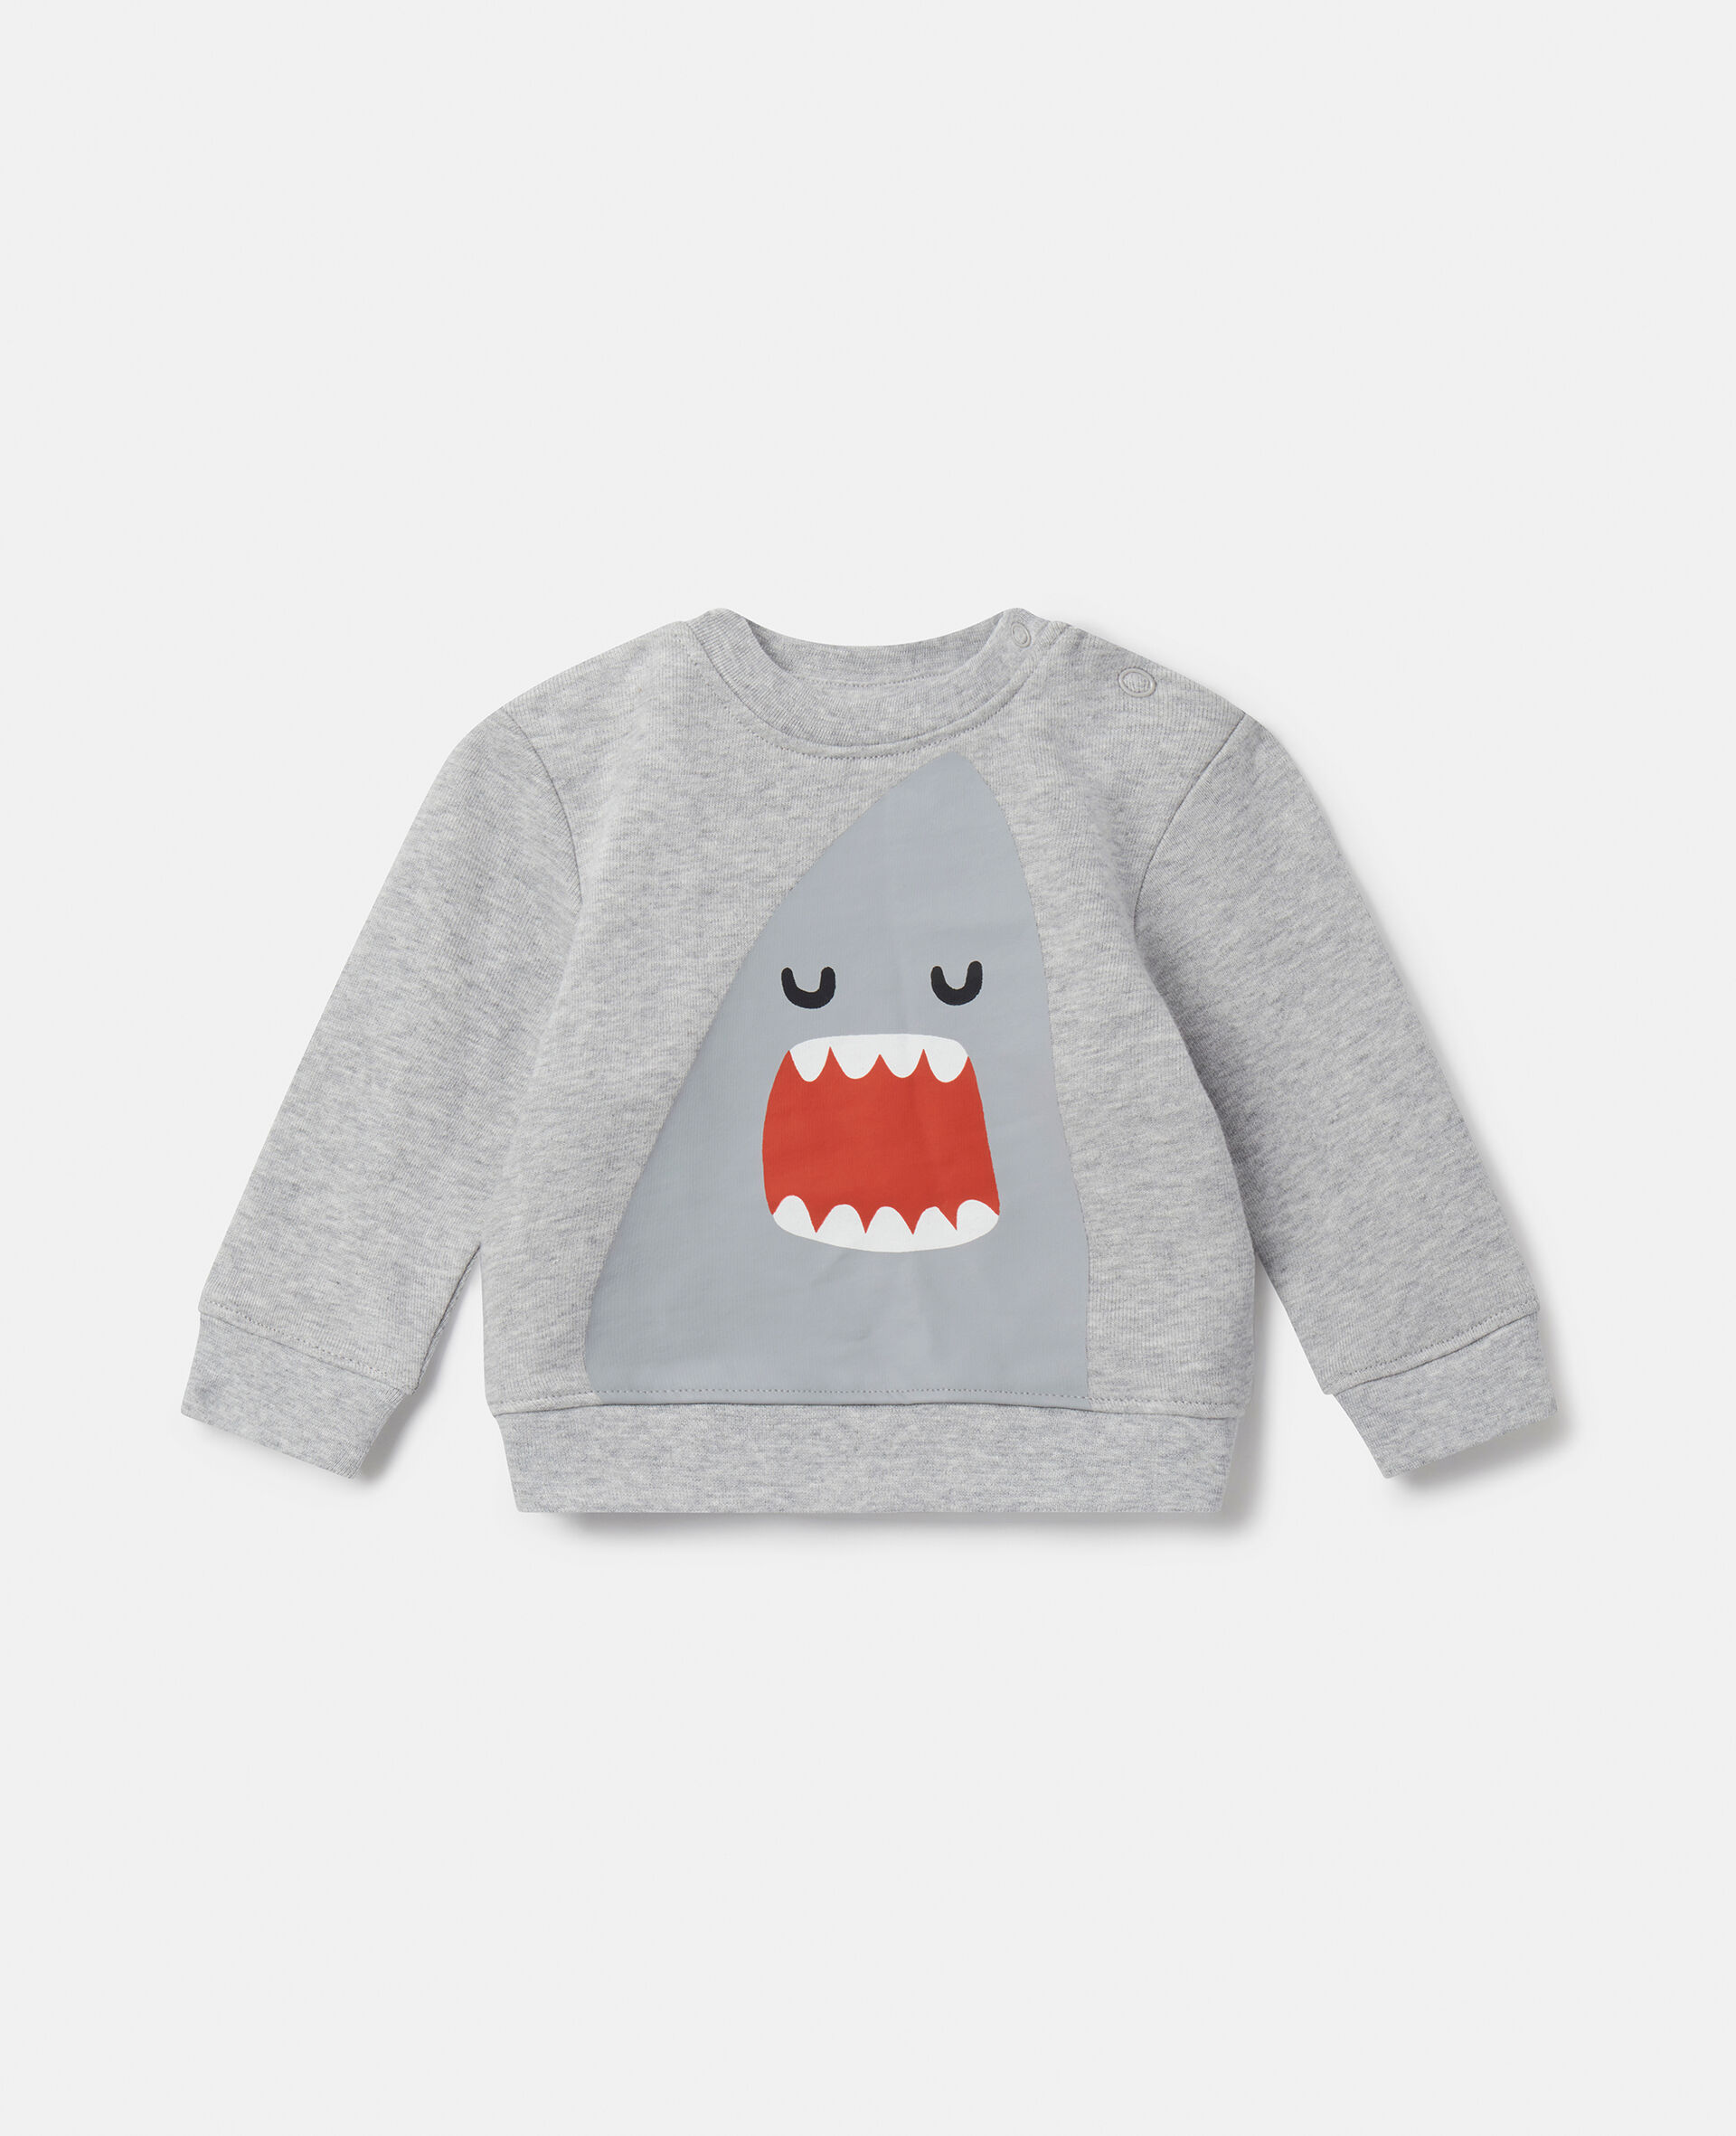 Shark Sweatshirt-Grey-large image number 0